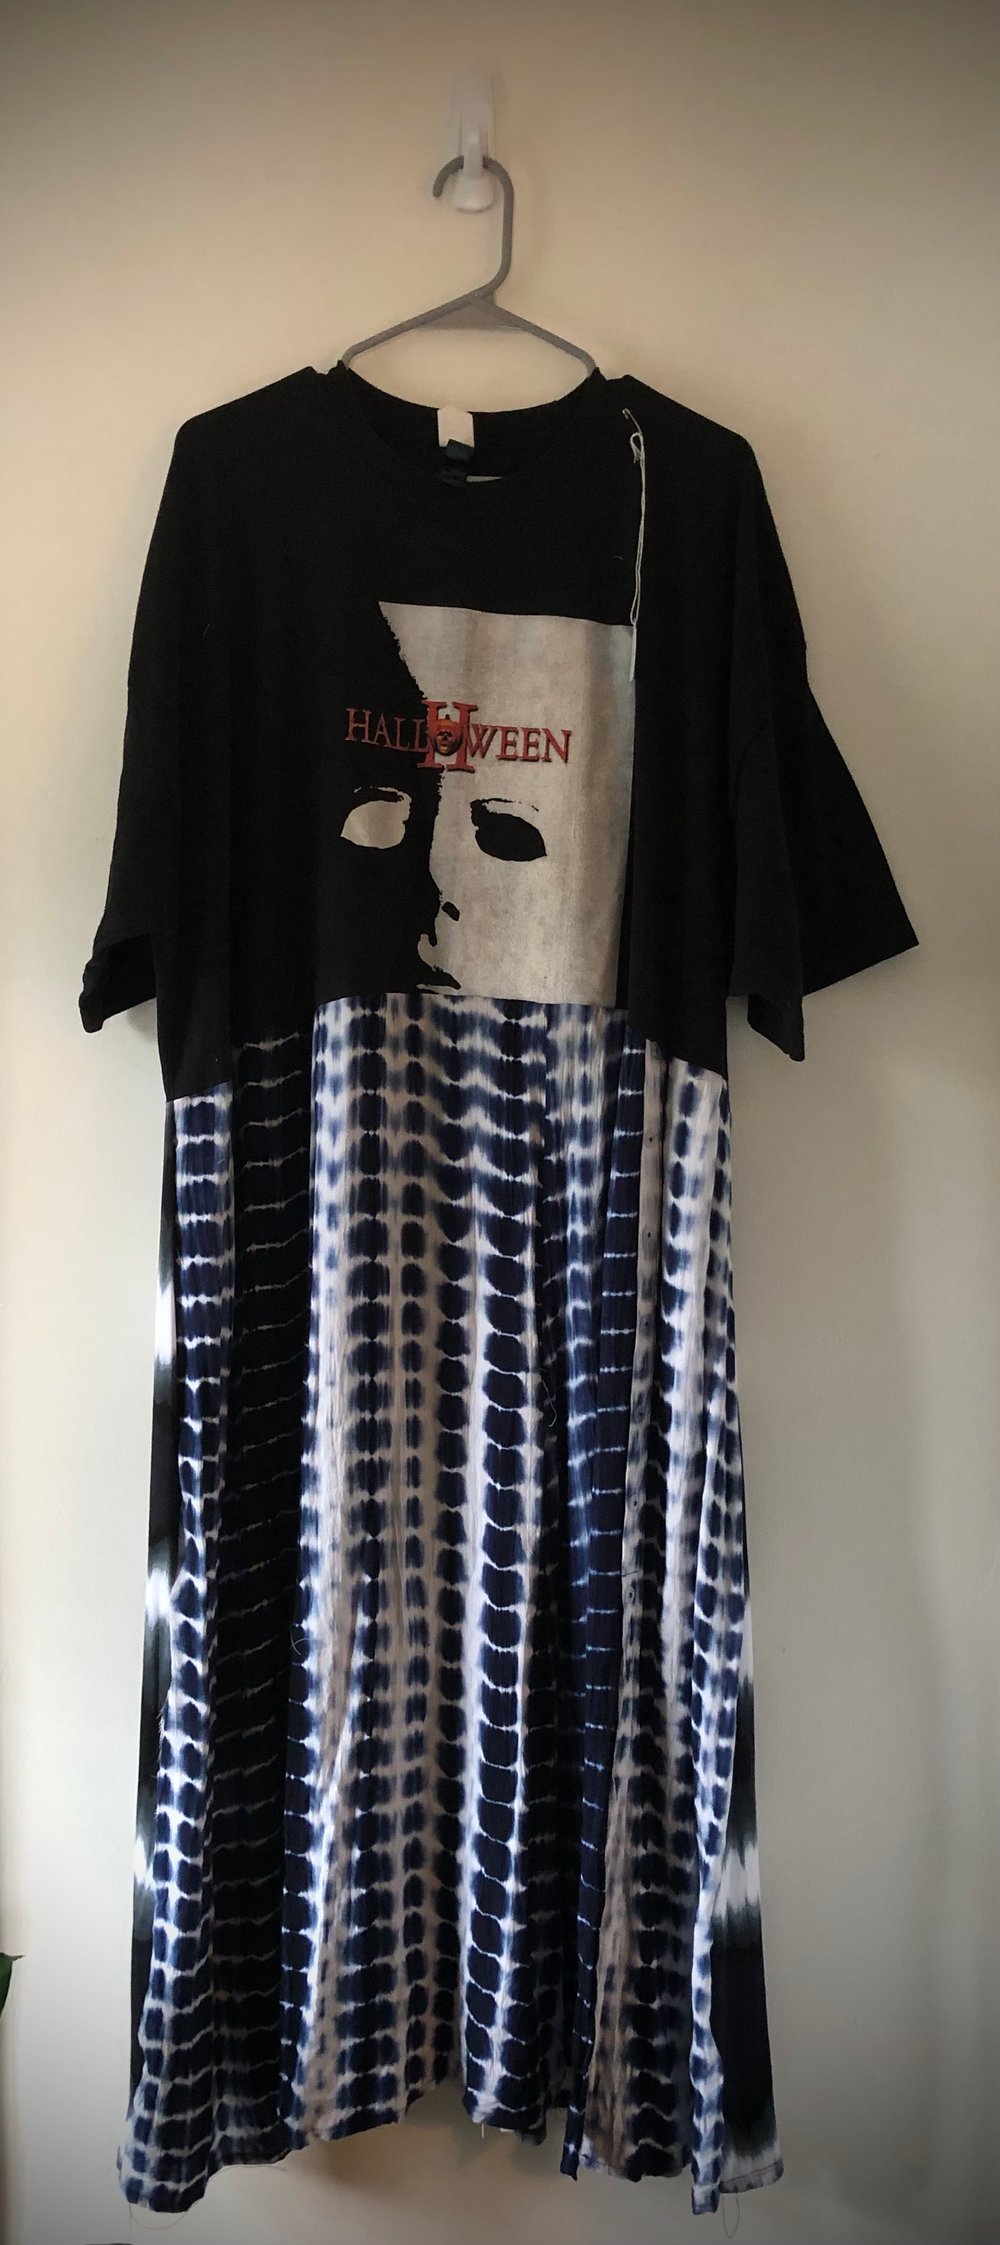 Upcycled “Halloween 2” t-shirt dress